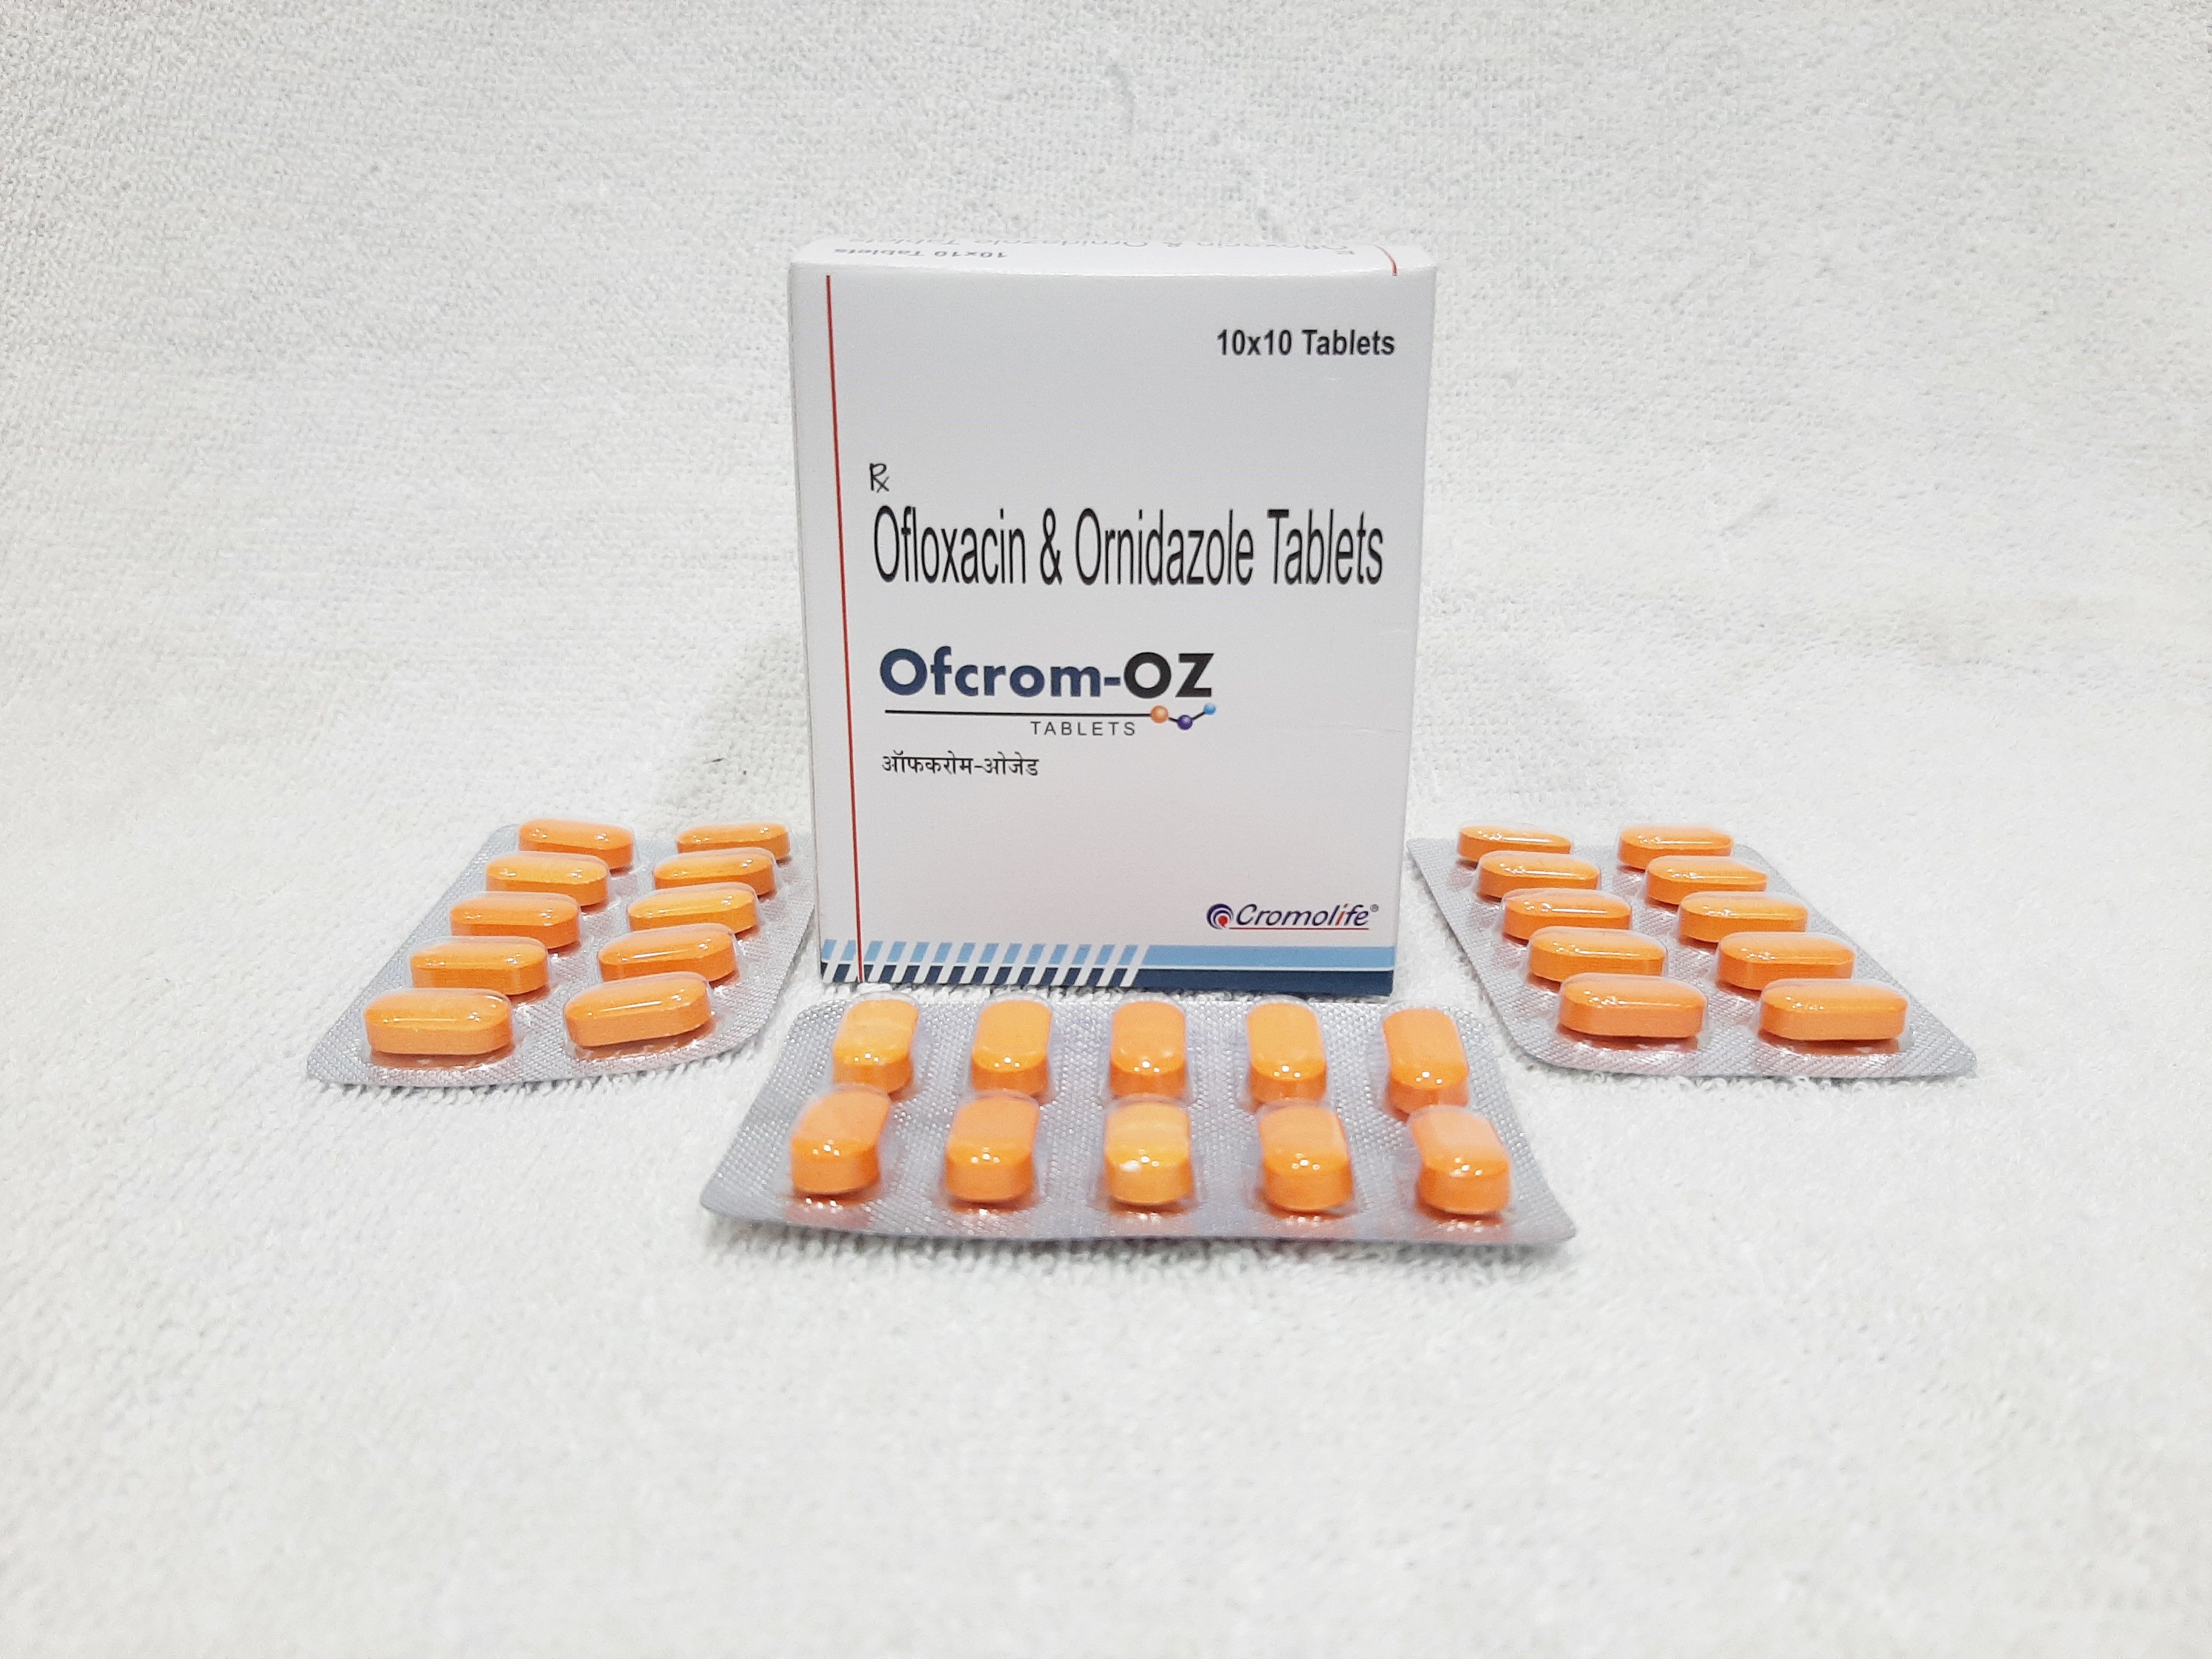 why use ofloxacin & ornidazole tablets